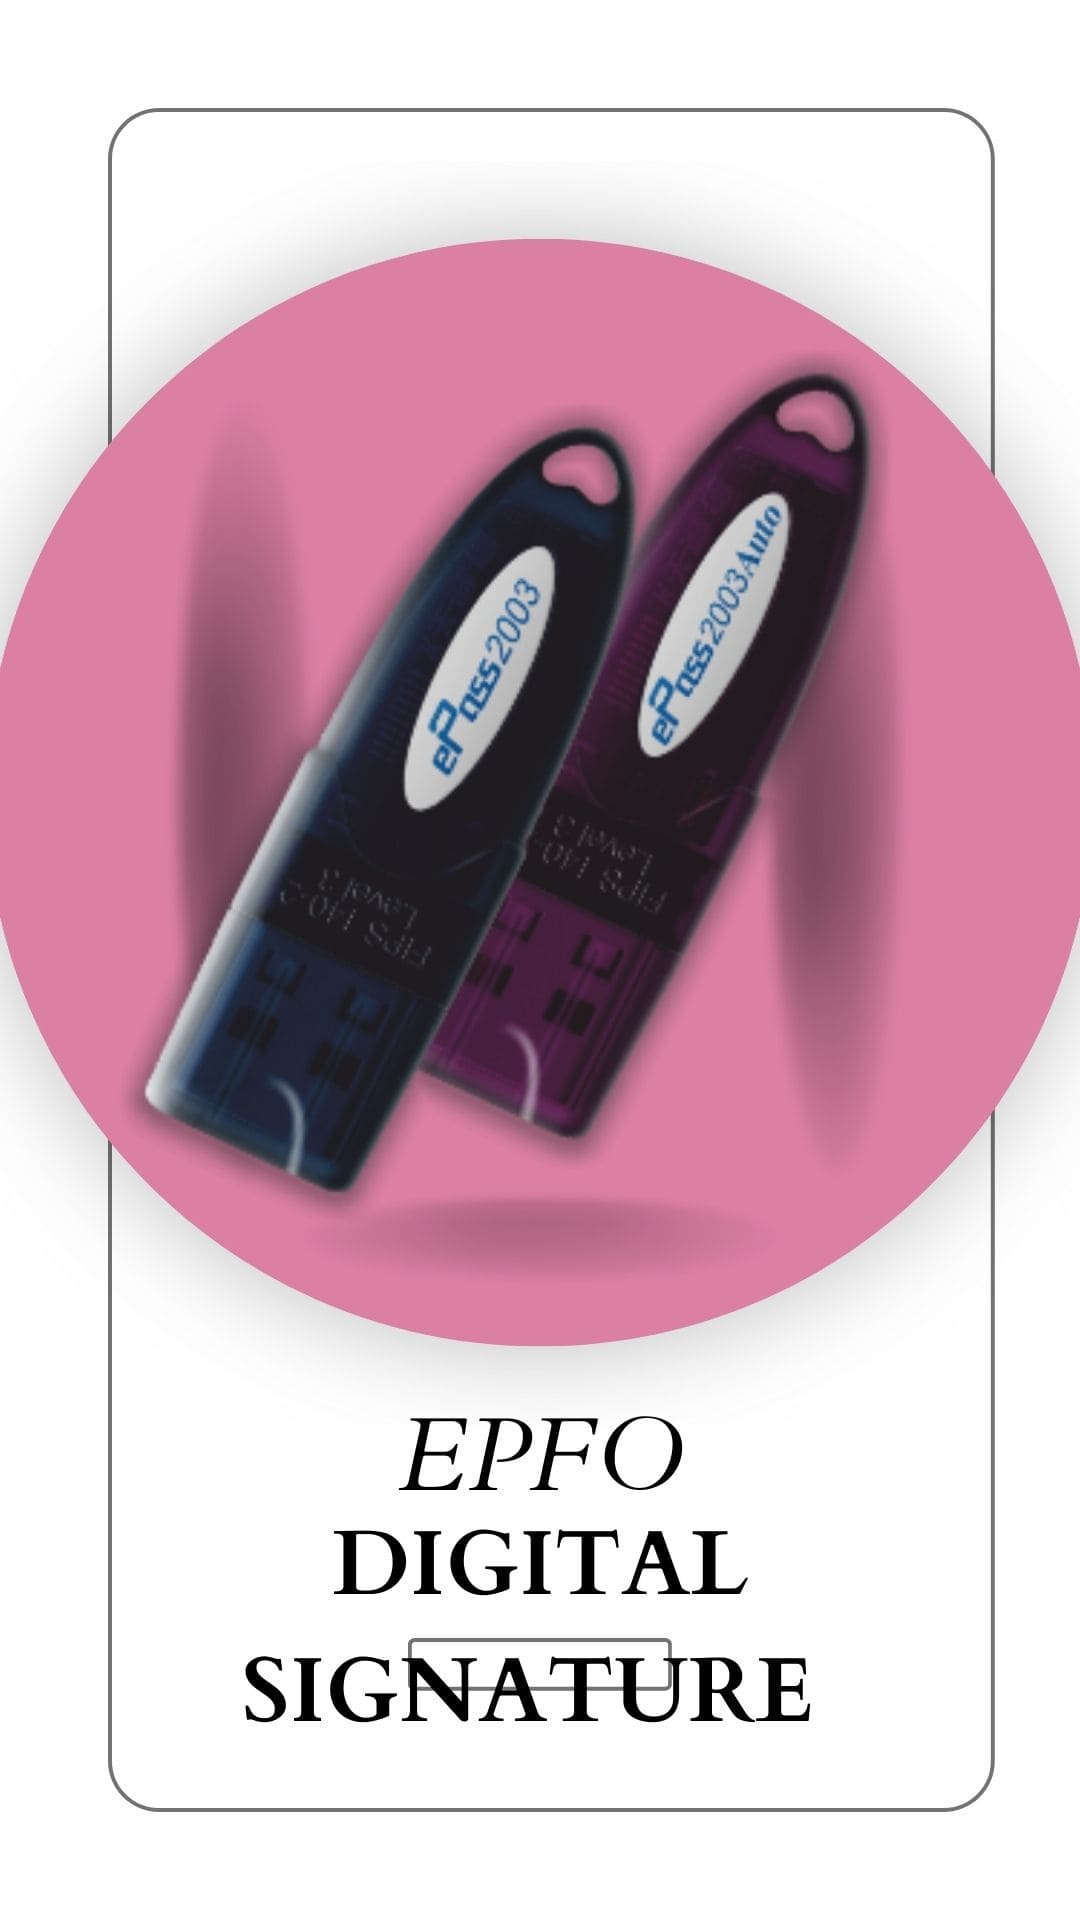 Digital signature for epfo